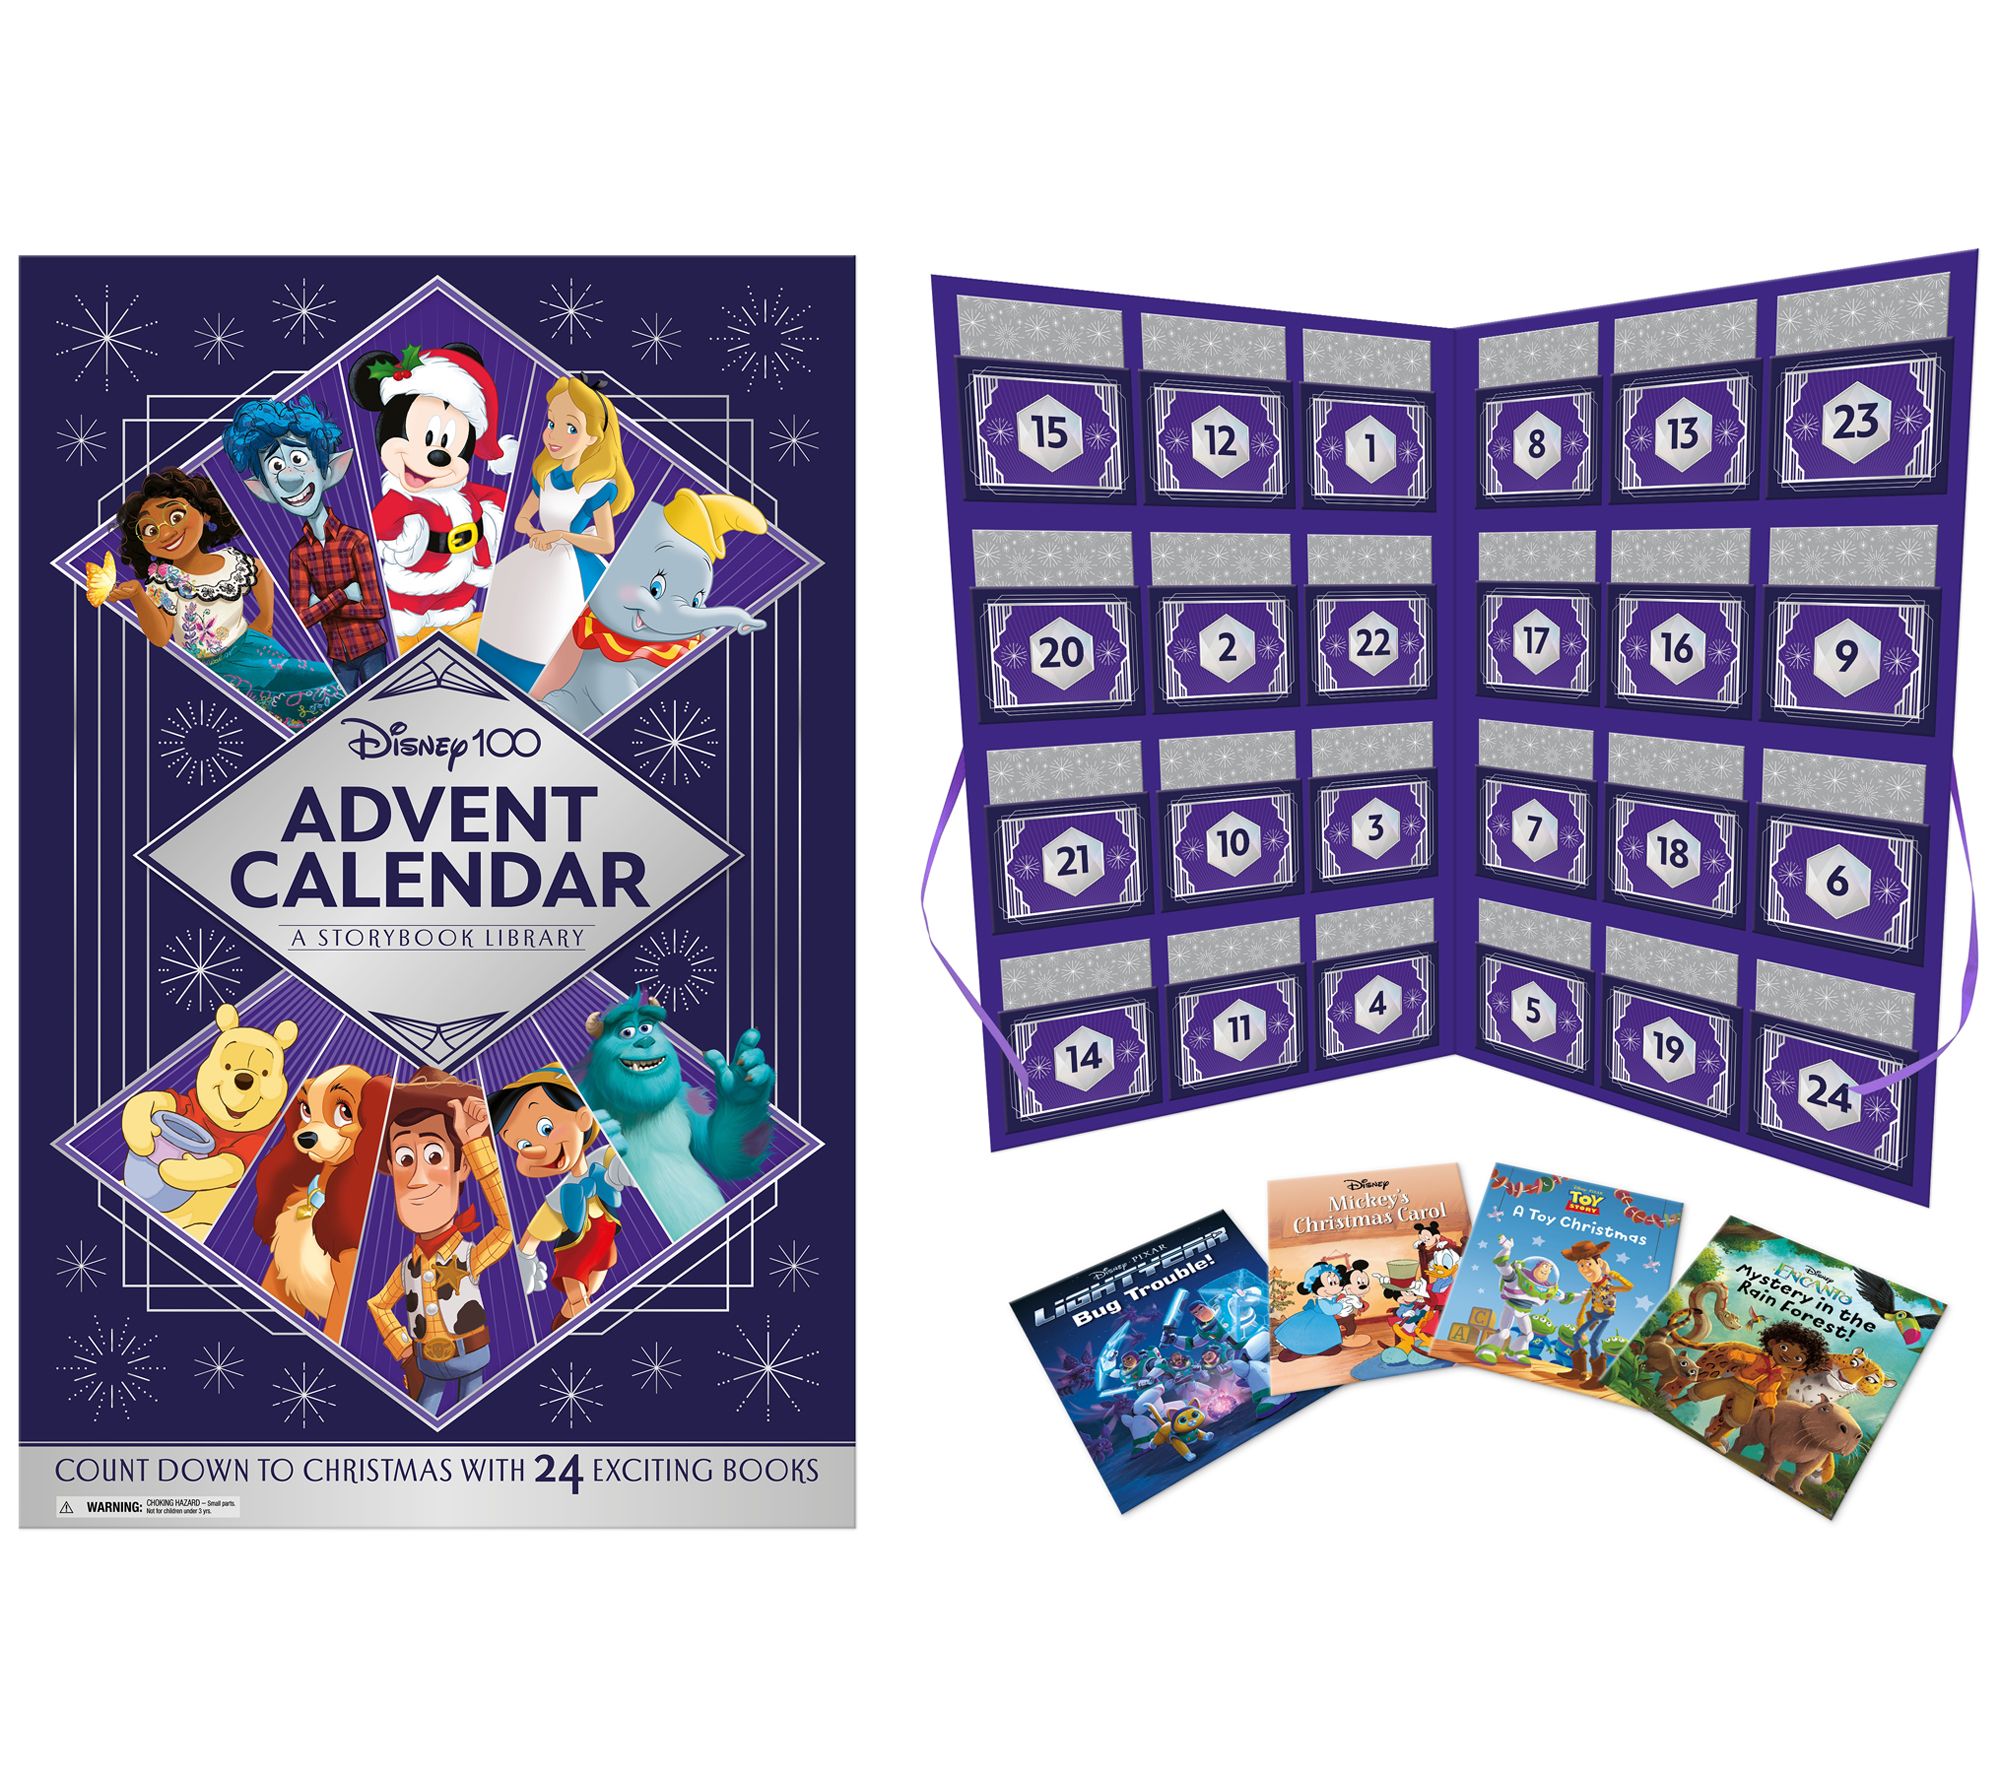 Books　w/　24　Disney100　Advent　Storybook　Calendar